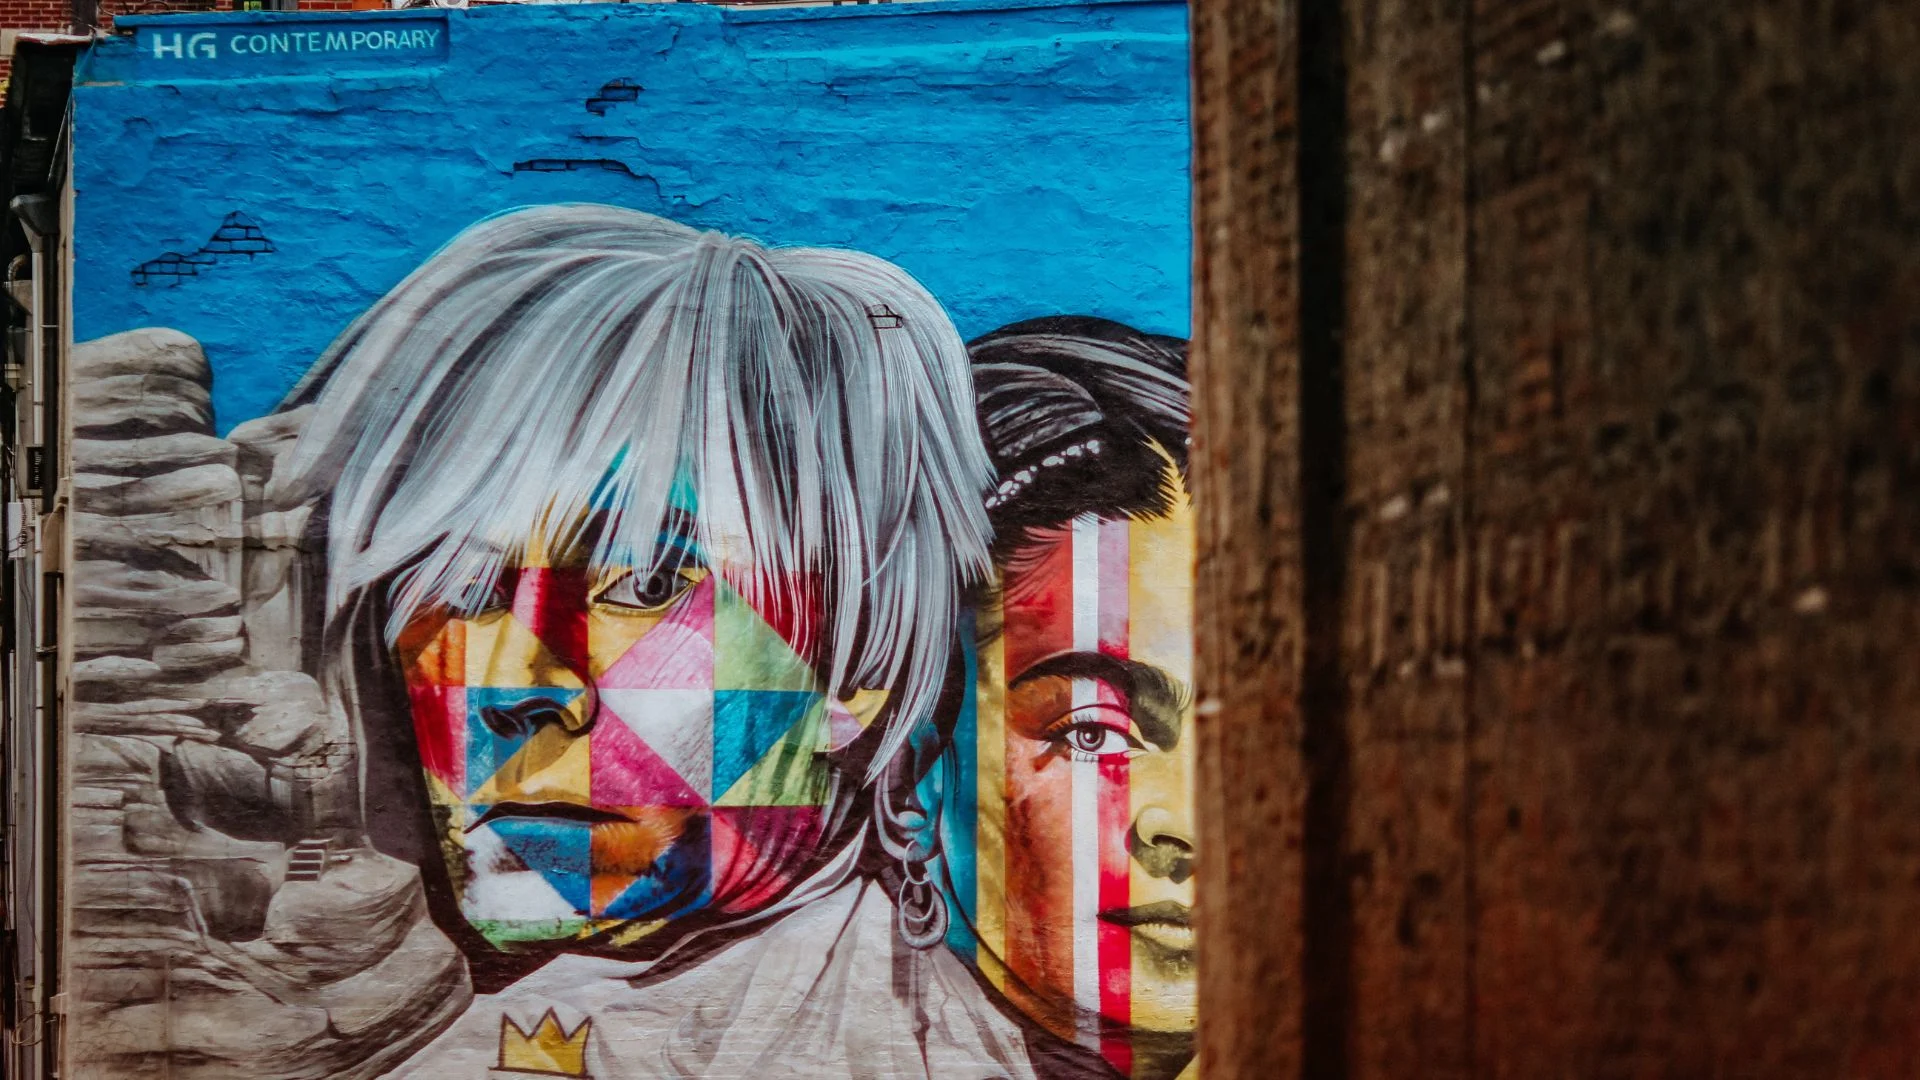 Graffiti of Andy Warhol's face on a building. Source: Jon Tyson / Unsplash